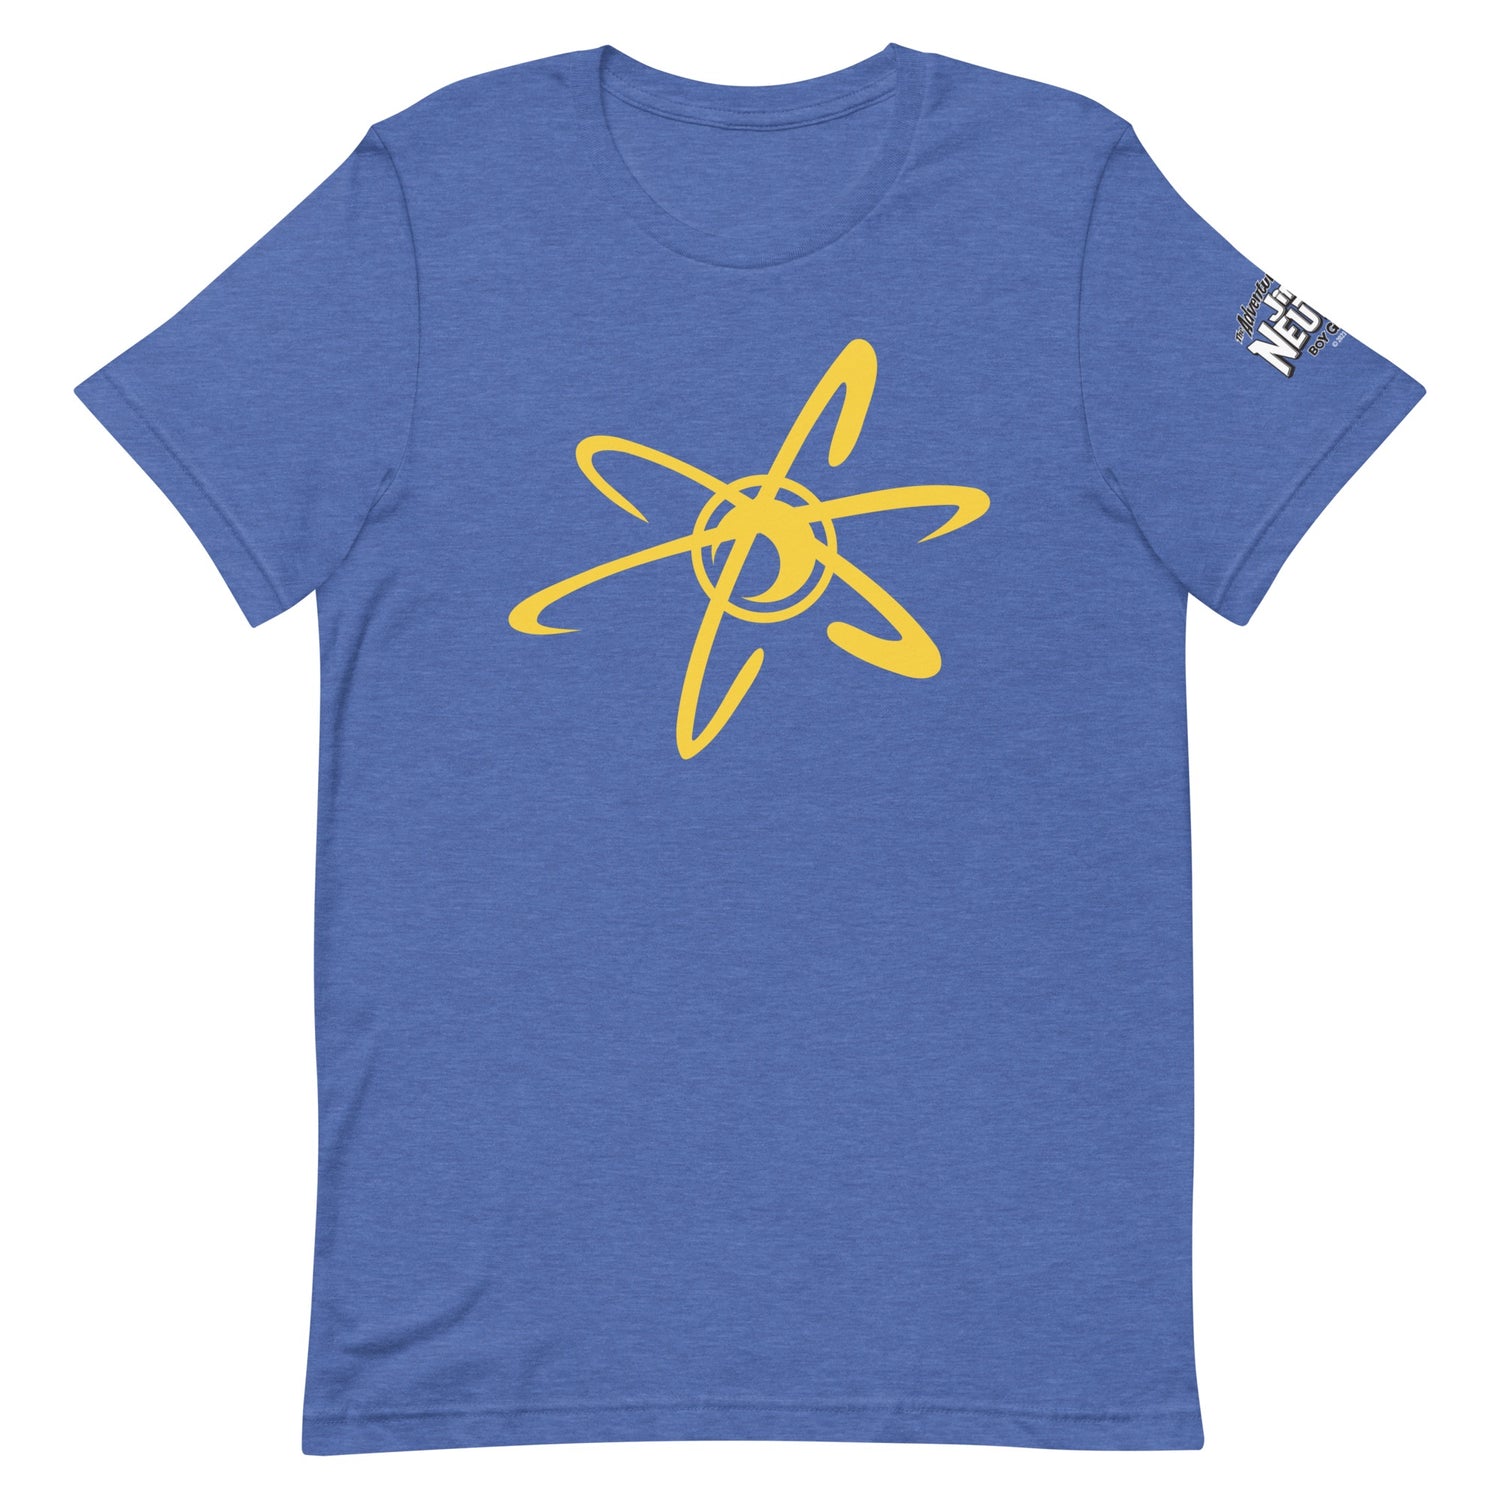 Shop Neutron, Sleeve Genius Atom Boy Adult of T-Shirt The – Short Jimmy Paramount Adventures